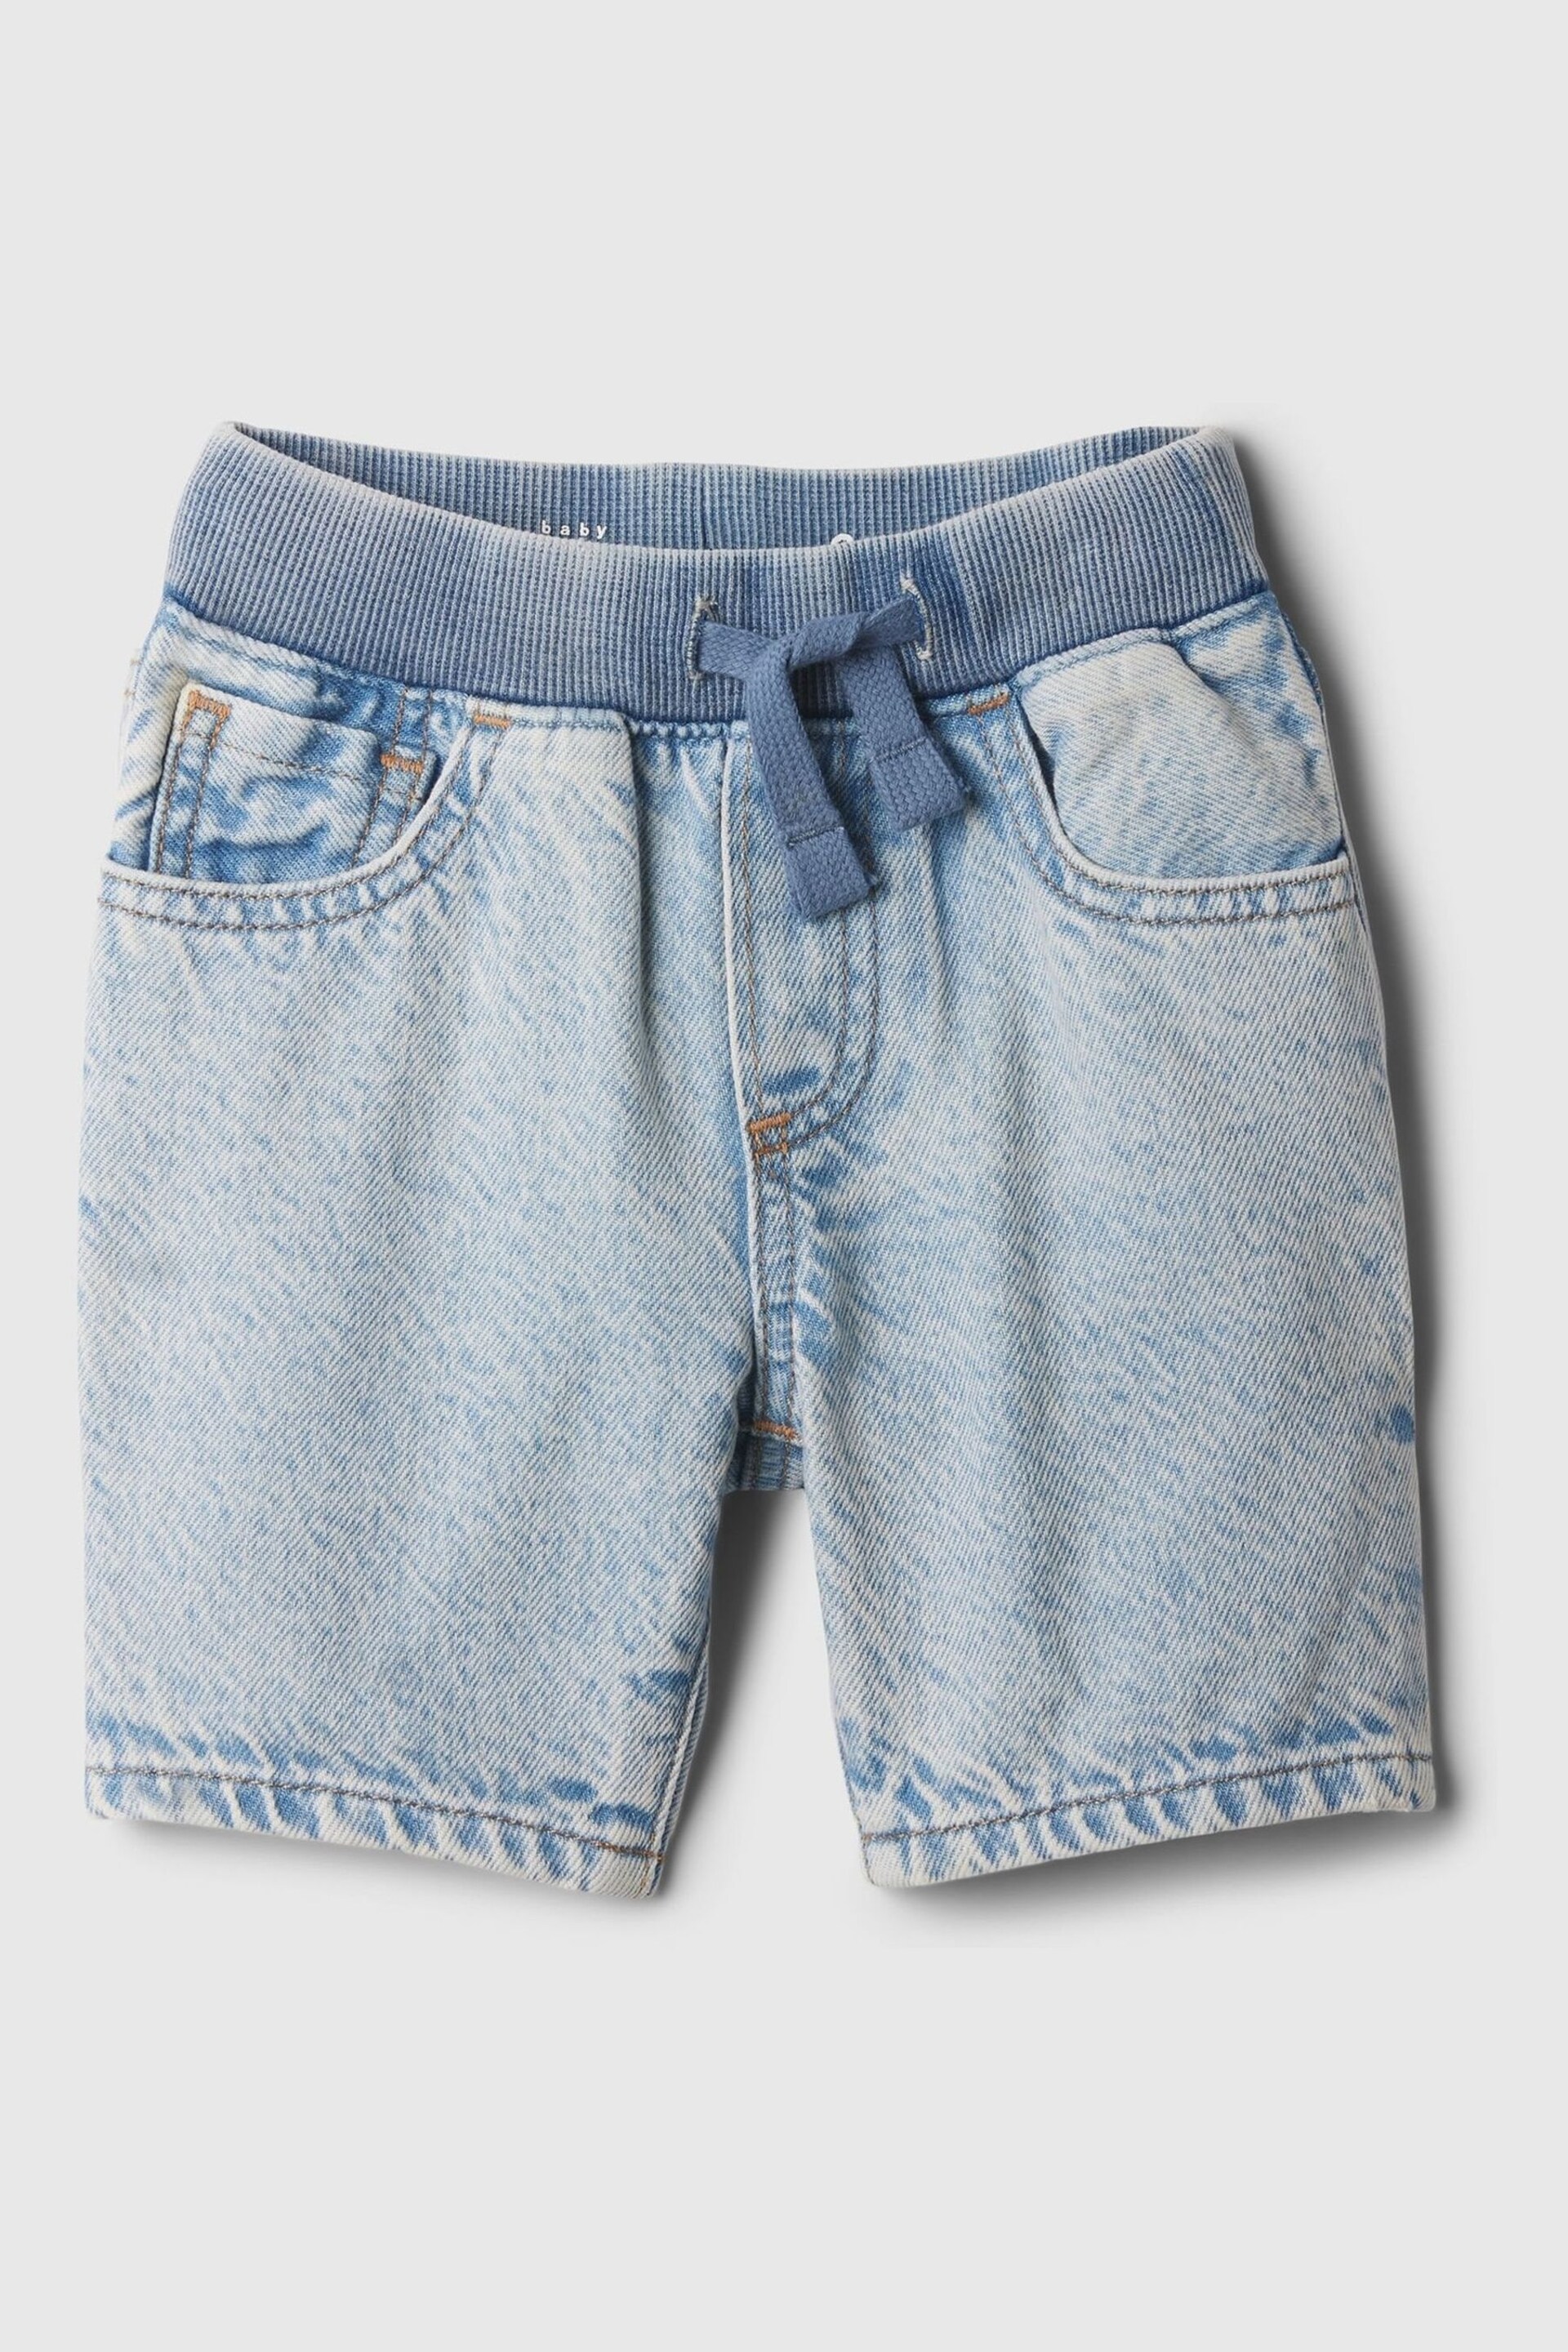 Gap Light Blue Dark Wash Denim Rib Waist Baby Pull On Shorts (6mths-5yrs) - Image 1 of 2